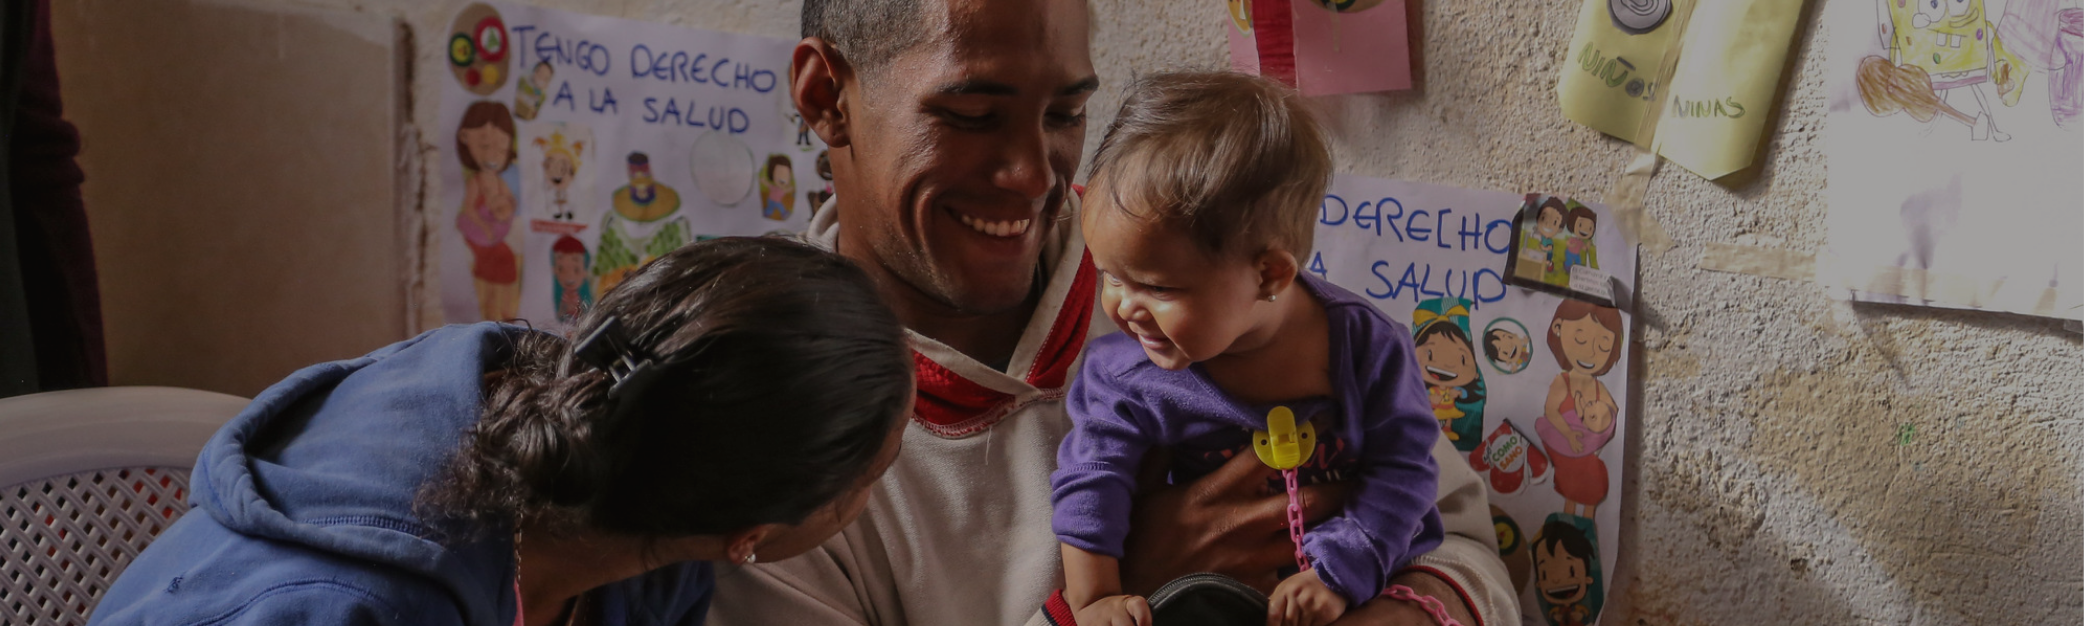 Análisis comparativo curricular para la primera infancia en América Latina